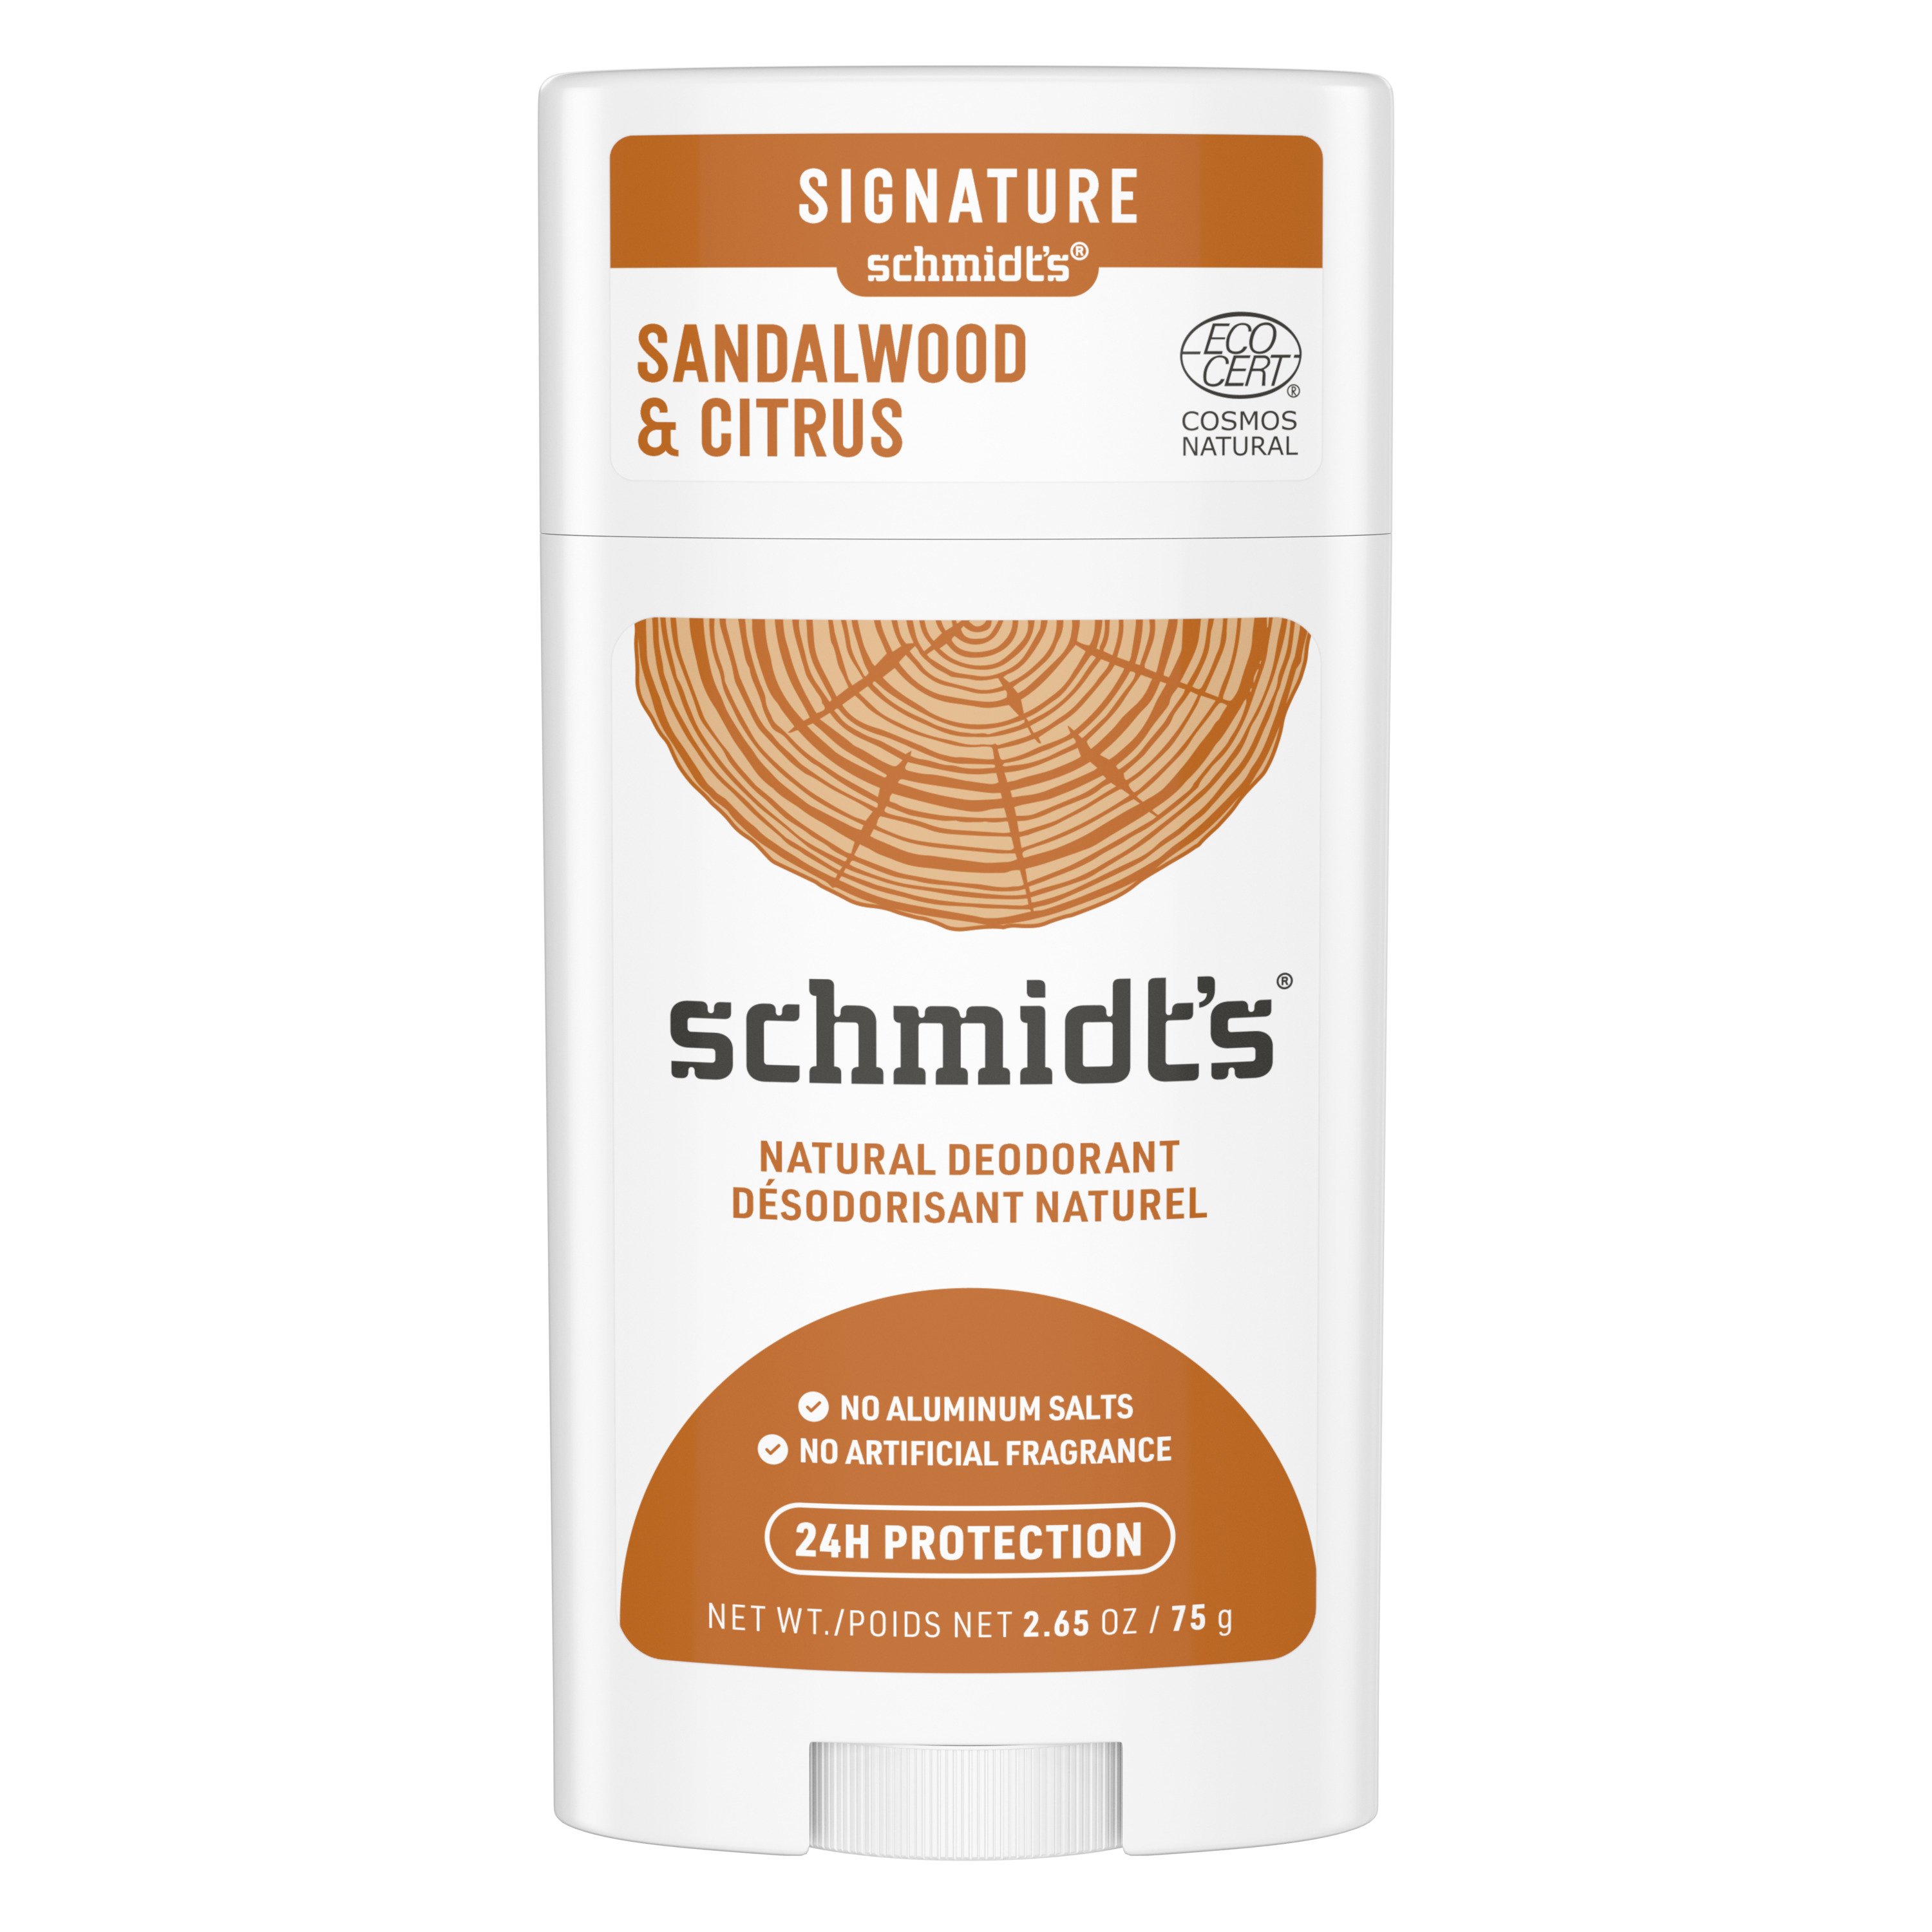 Schmidt's Free Natural Deodorant - Sandalwood & Citrus - Shop Deodorant & Antiperspirant at H-E-B